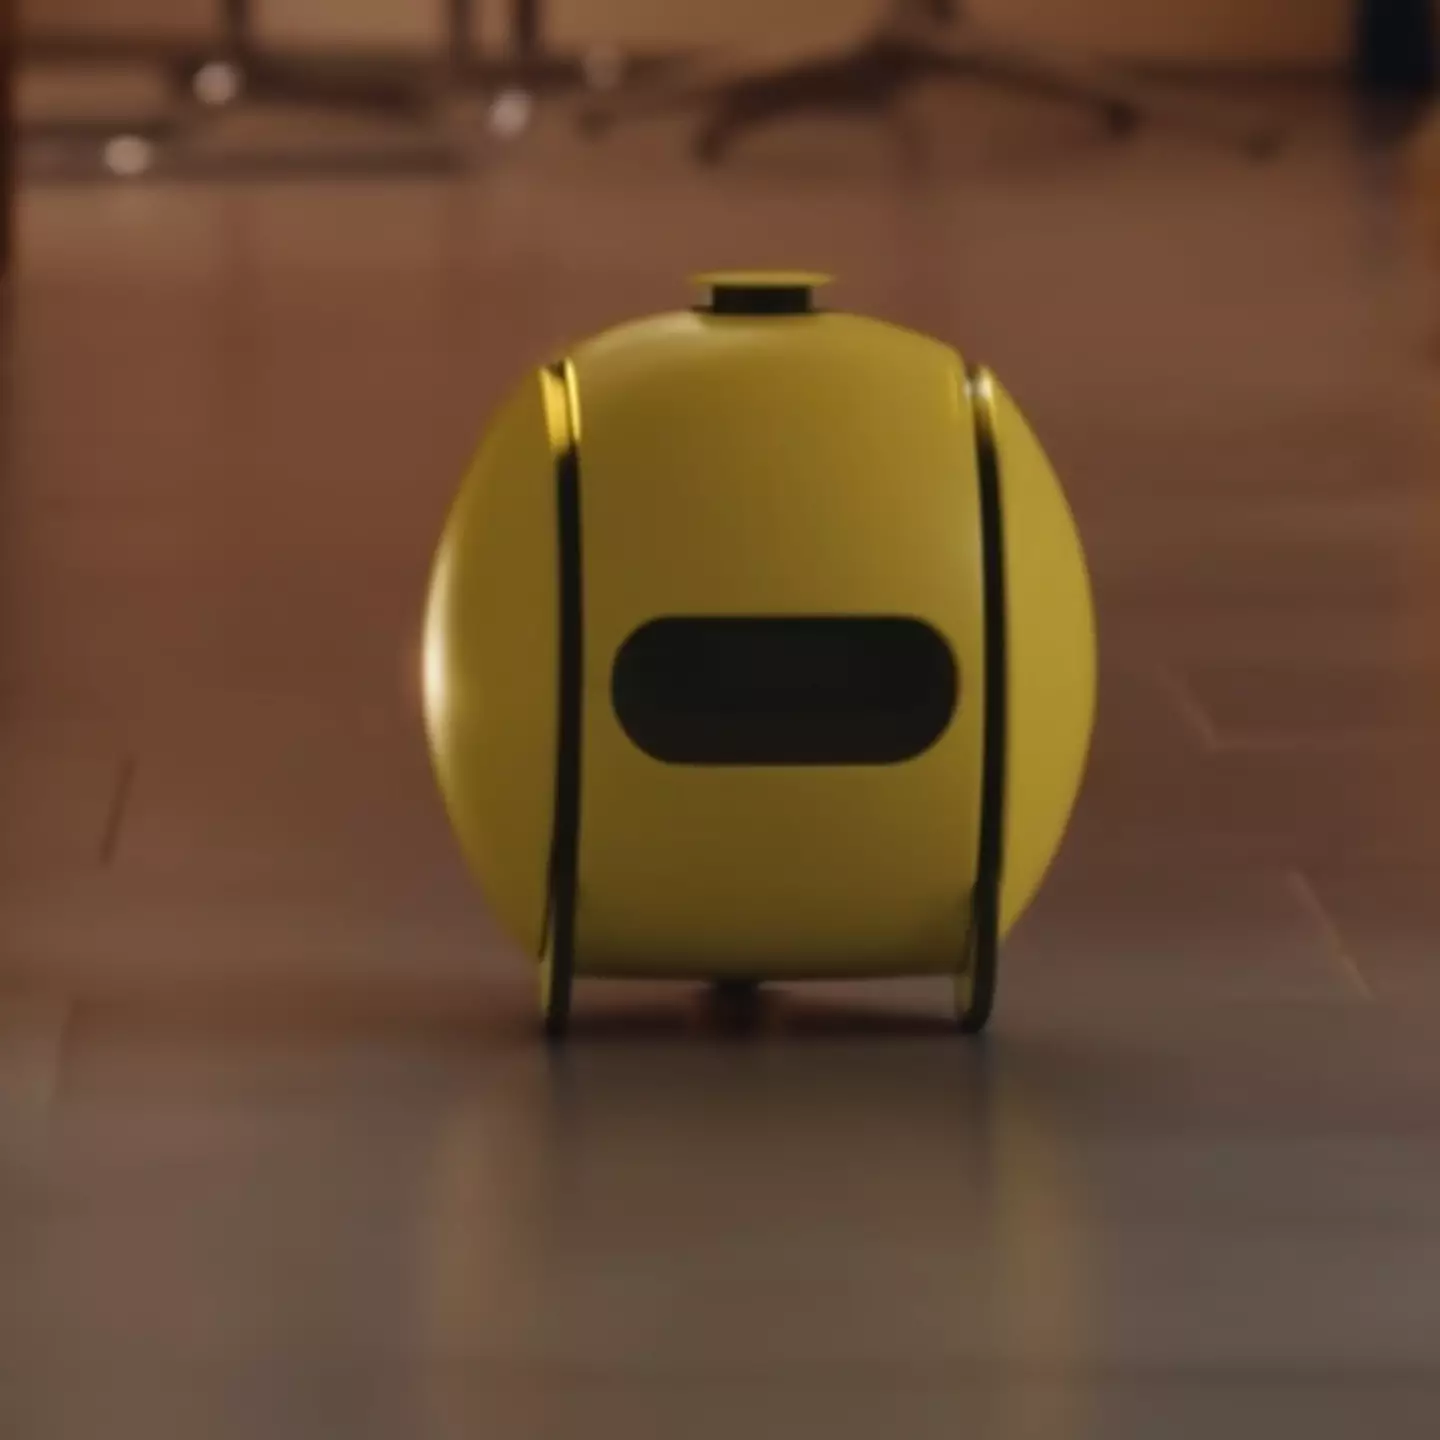 Samsung unveils new 'AI robot companion Ballie’ that follows you around home